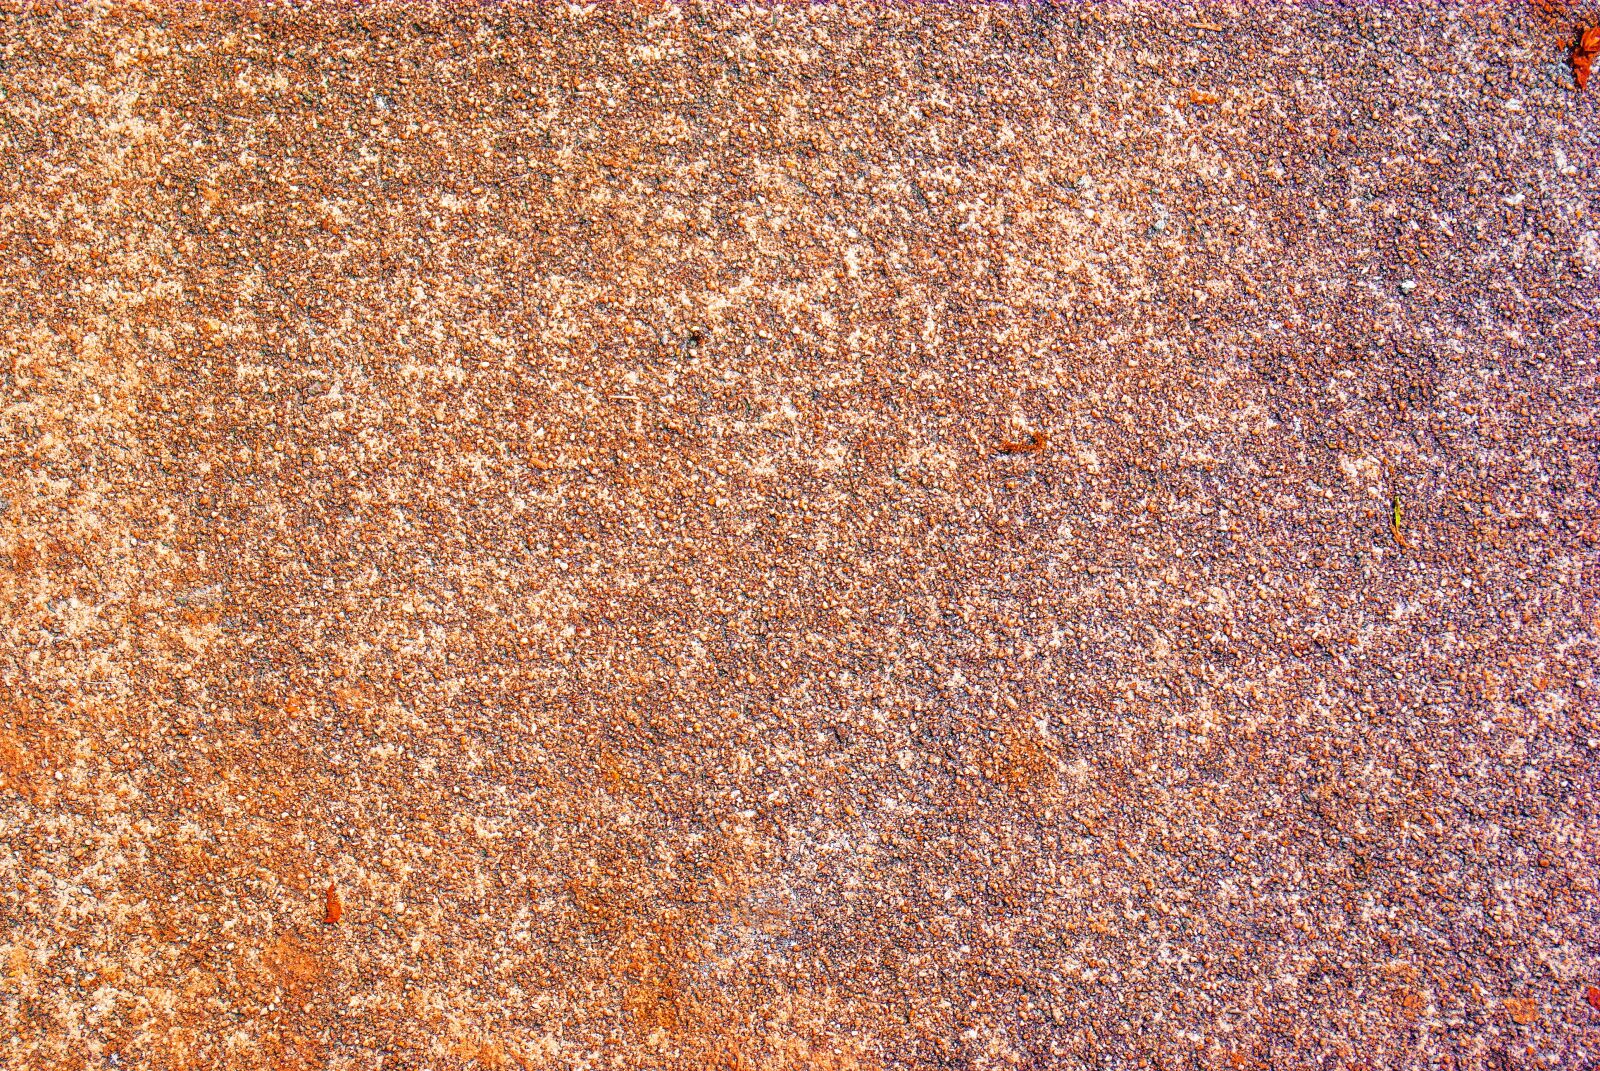 Pentax smc DA 18-55mm F3.5-5.6 AL sample photo. Texture, wall, concrete photography